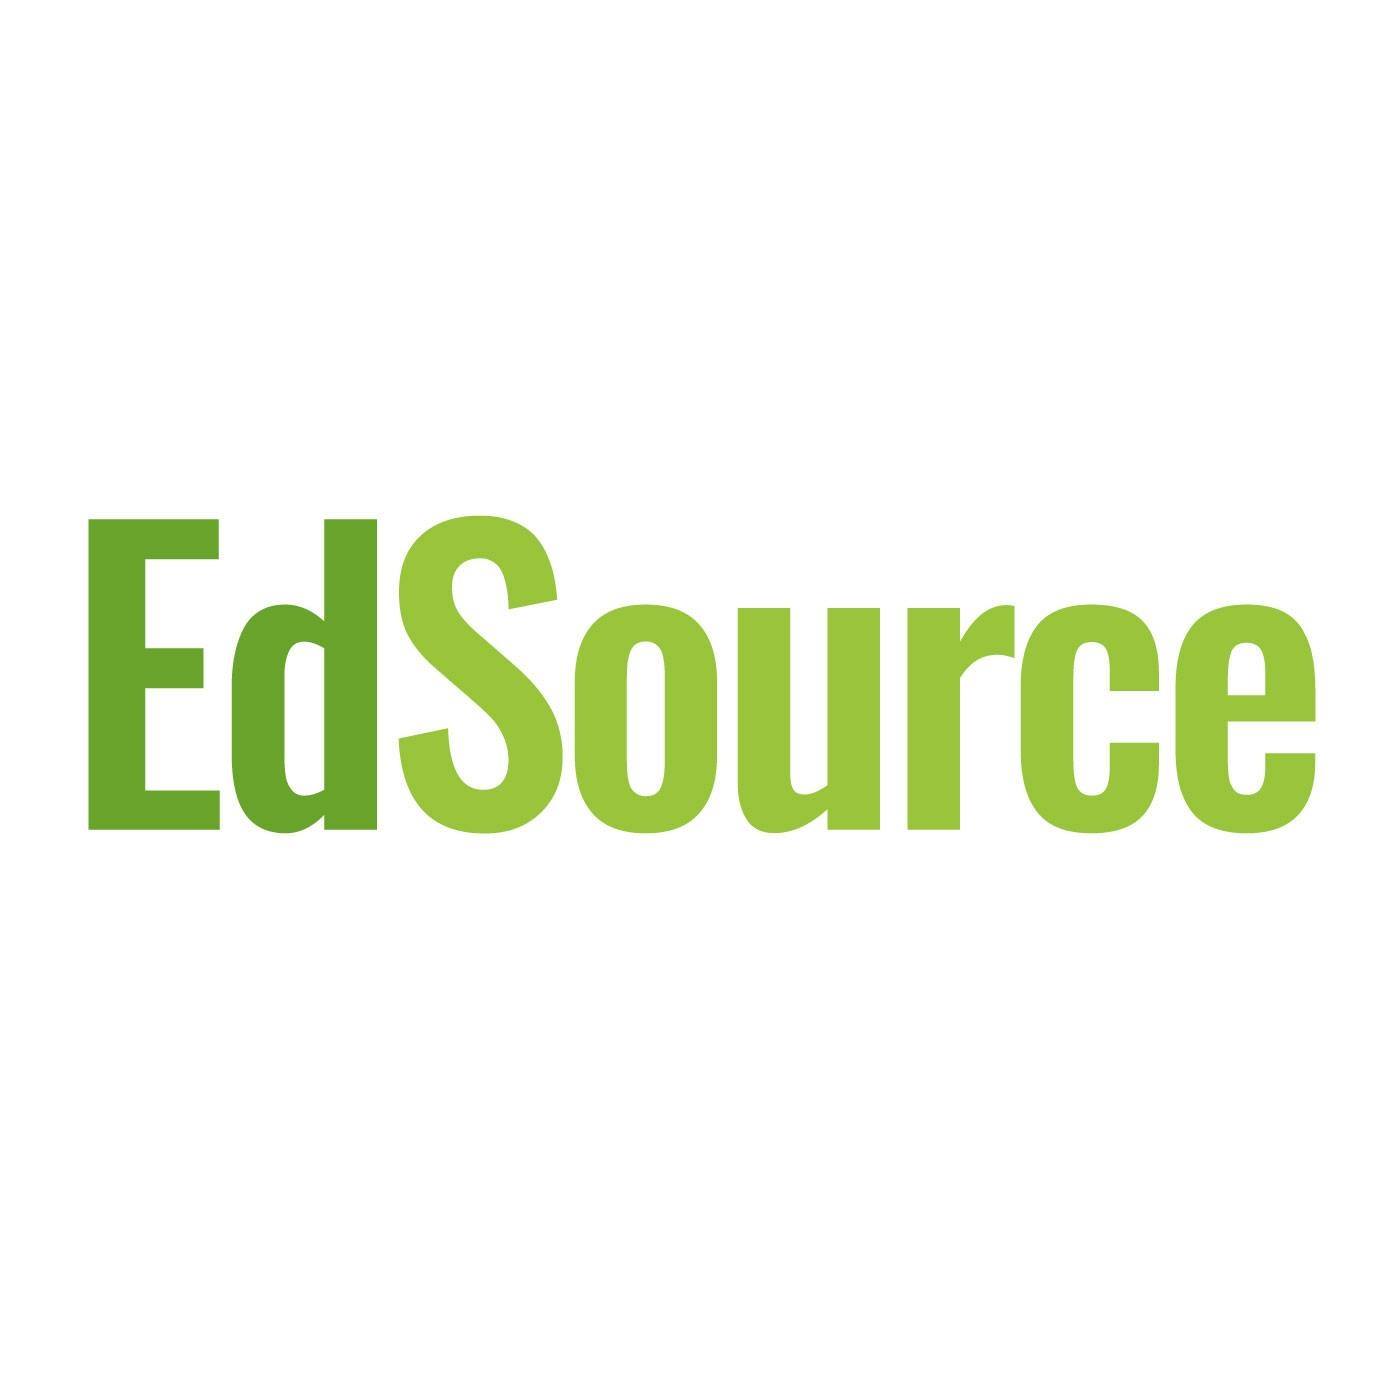 EdSource website logo